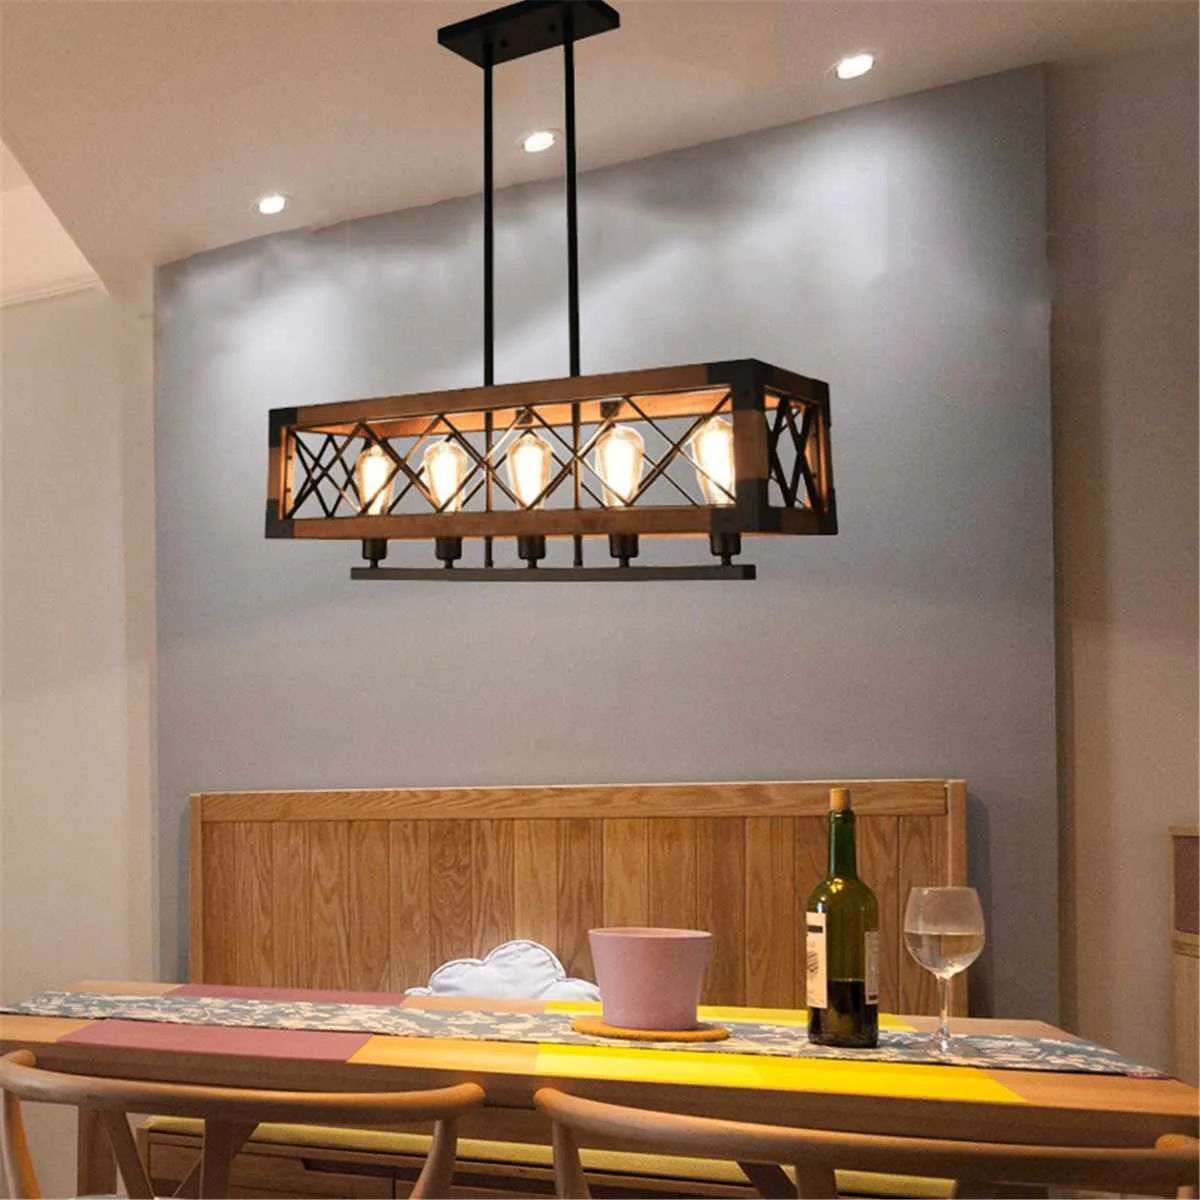 

Modern Rectangle Cuboid Led Chandelier Lights For Living Room Dining Kitchen Bar Ceiling Lamp Classical Wooden Hanging Lights